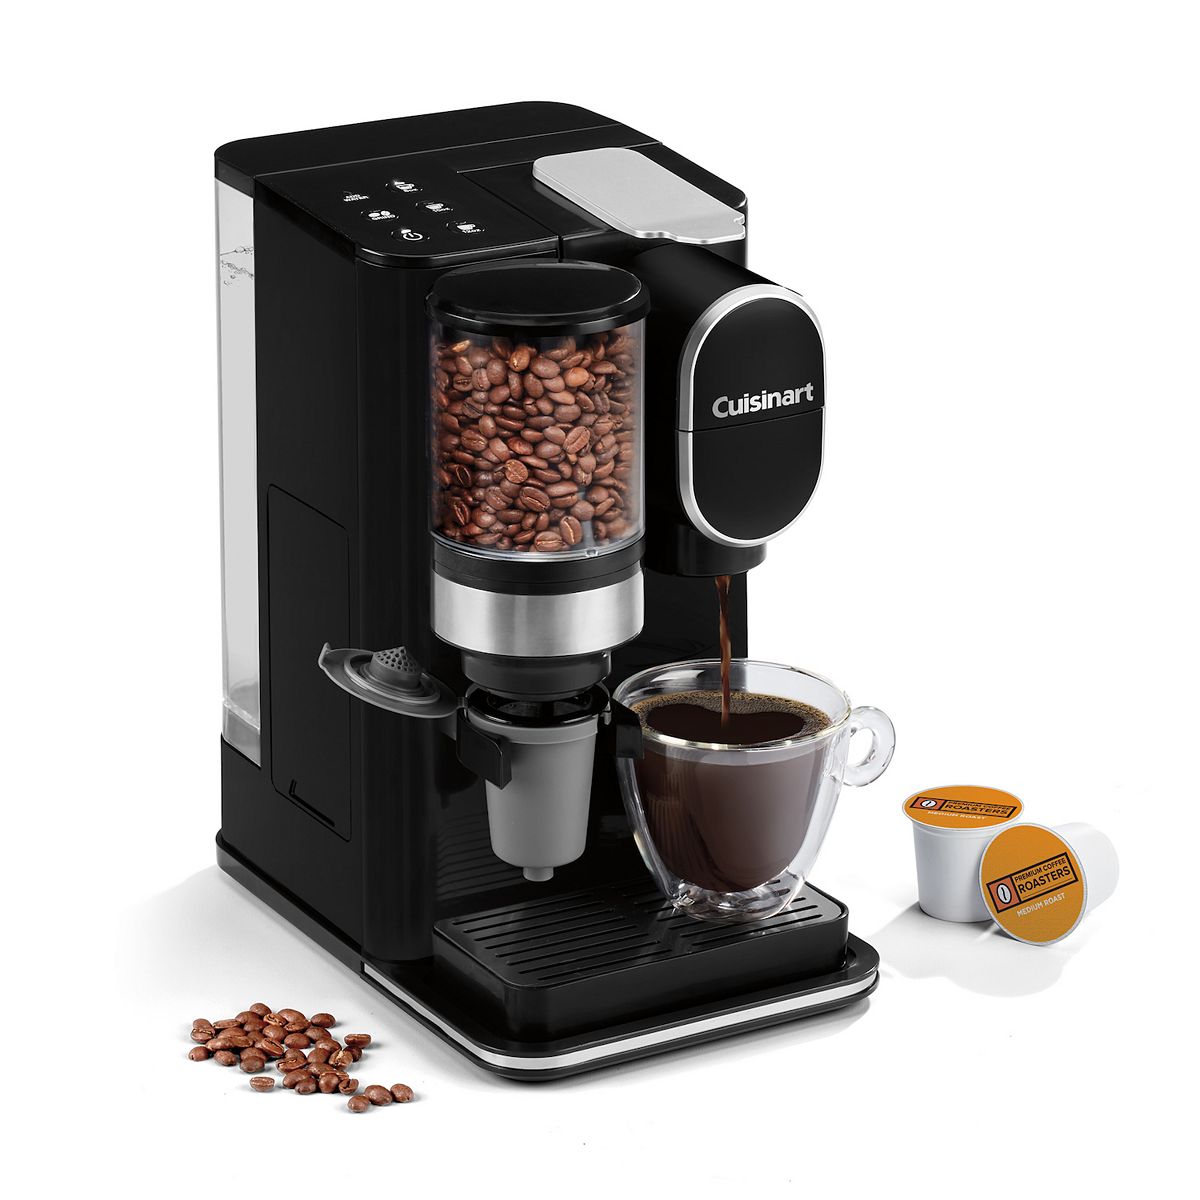 Cuisinart Grind & Brew Single-Serve Coffeemaker (DGB-2) + $15 Kohl's Cash $76.50 + Free Shipping